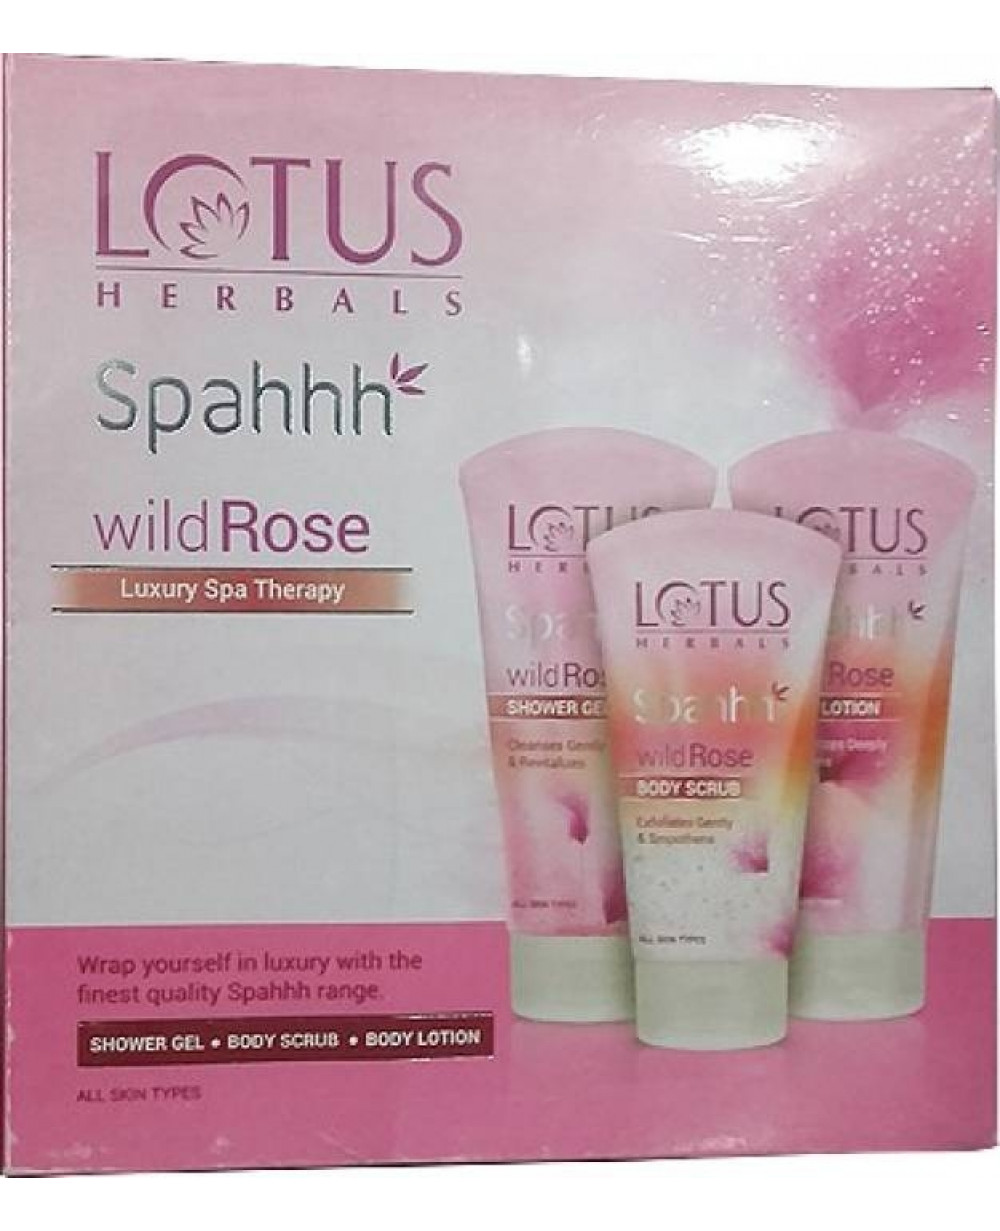 Lotus Herbal Spahhh Wild Rose Luxury Spa Therapy Kit